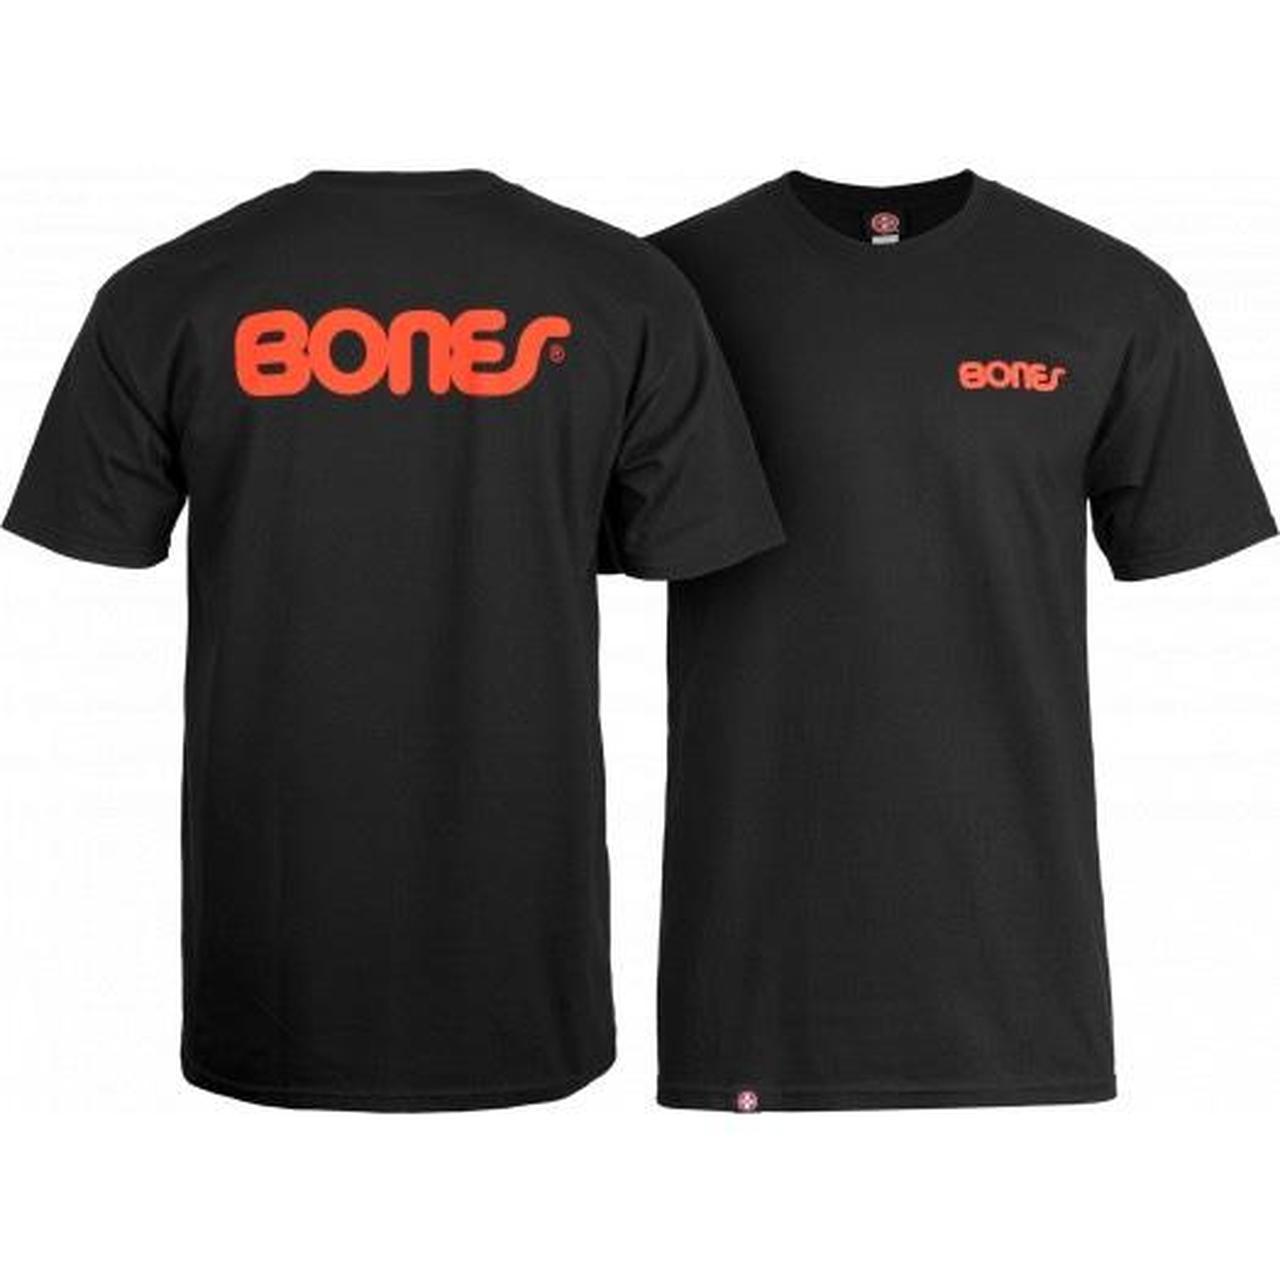 Bones Men's Black and Red T-shirt